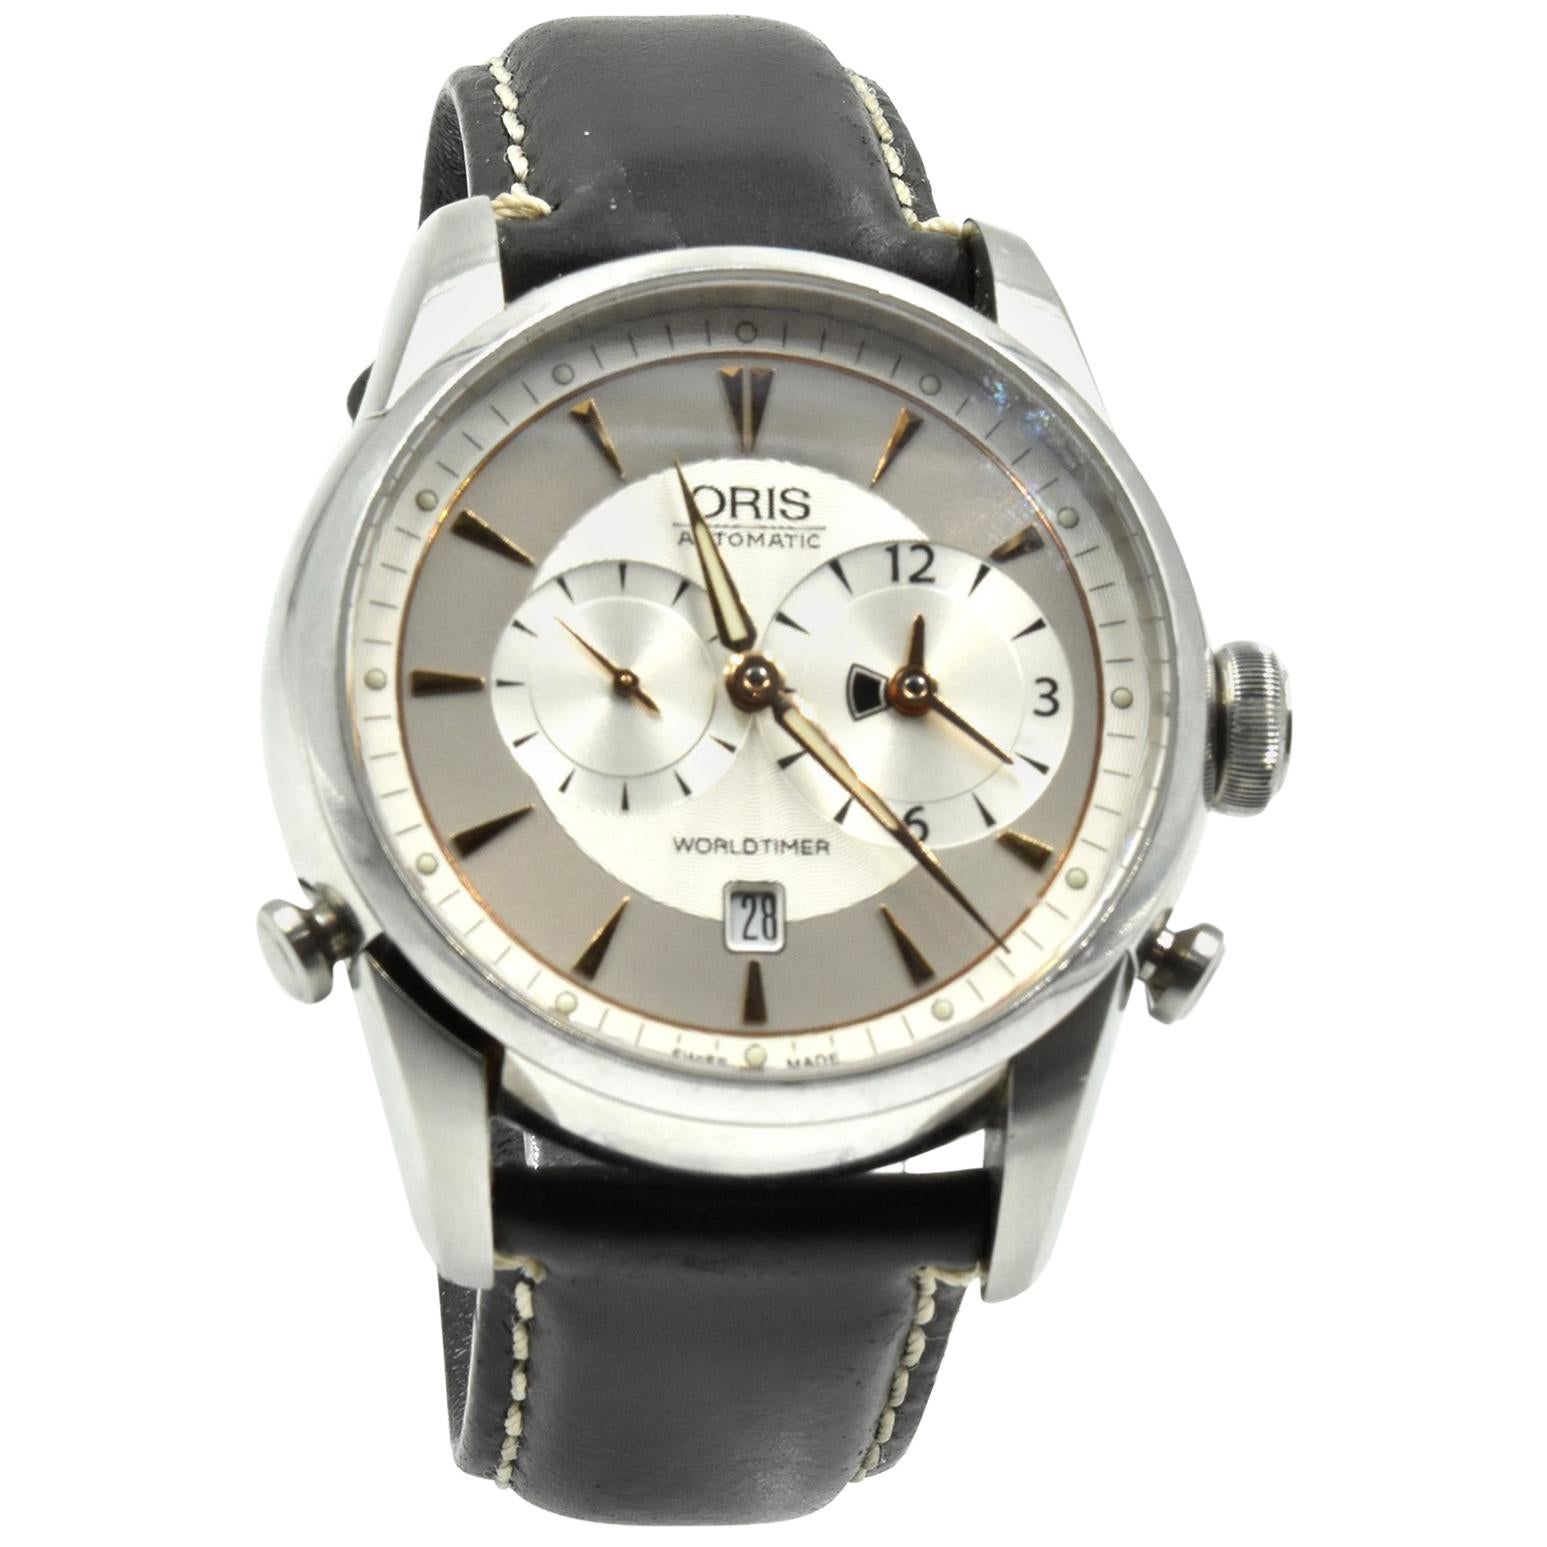 Oris Artelier Worldtimer Black Calf Skin Automatic Watch Ref 690-7581-4051LS